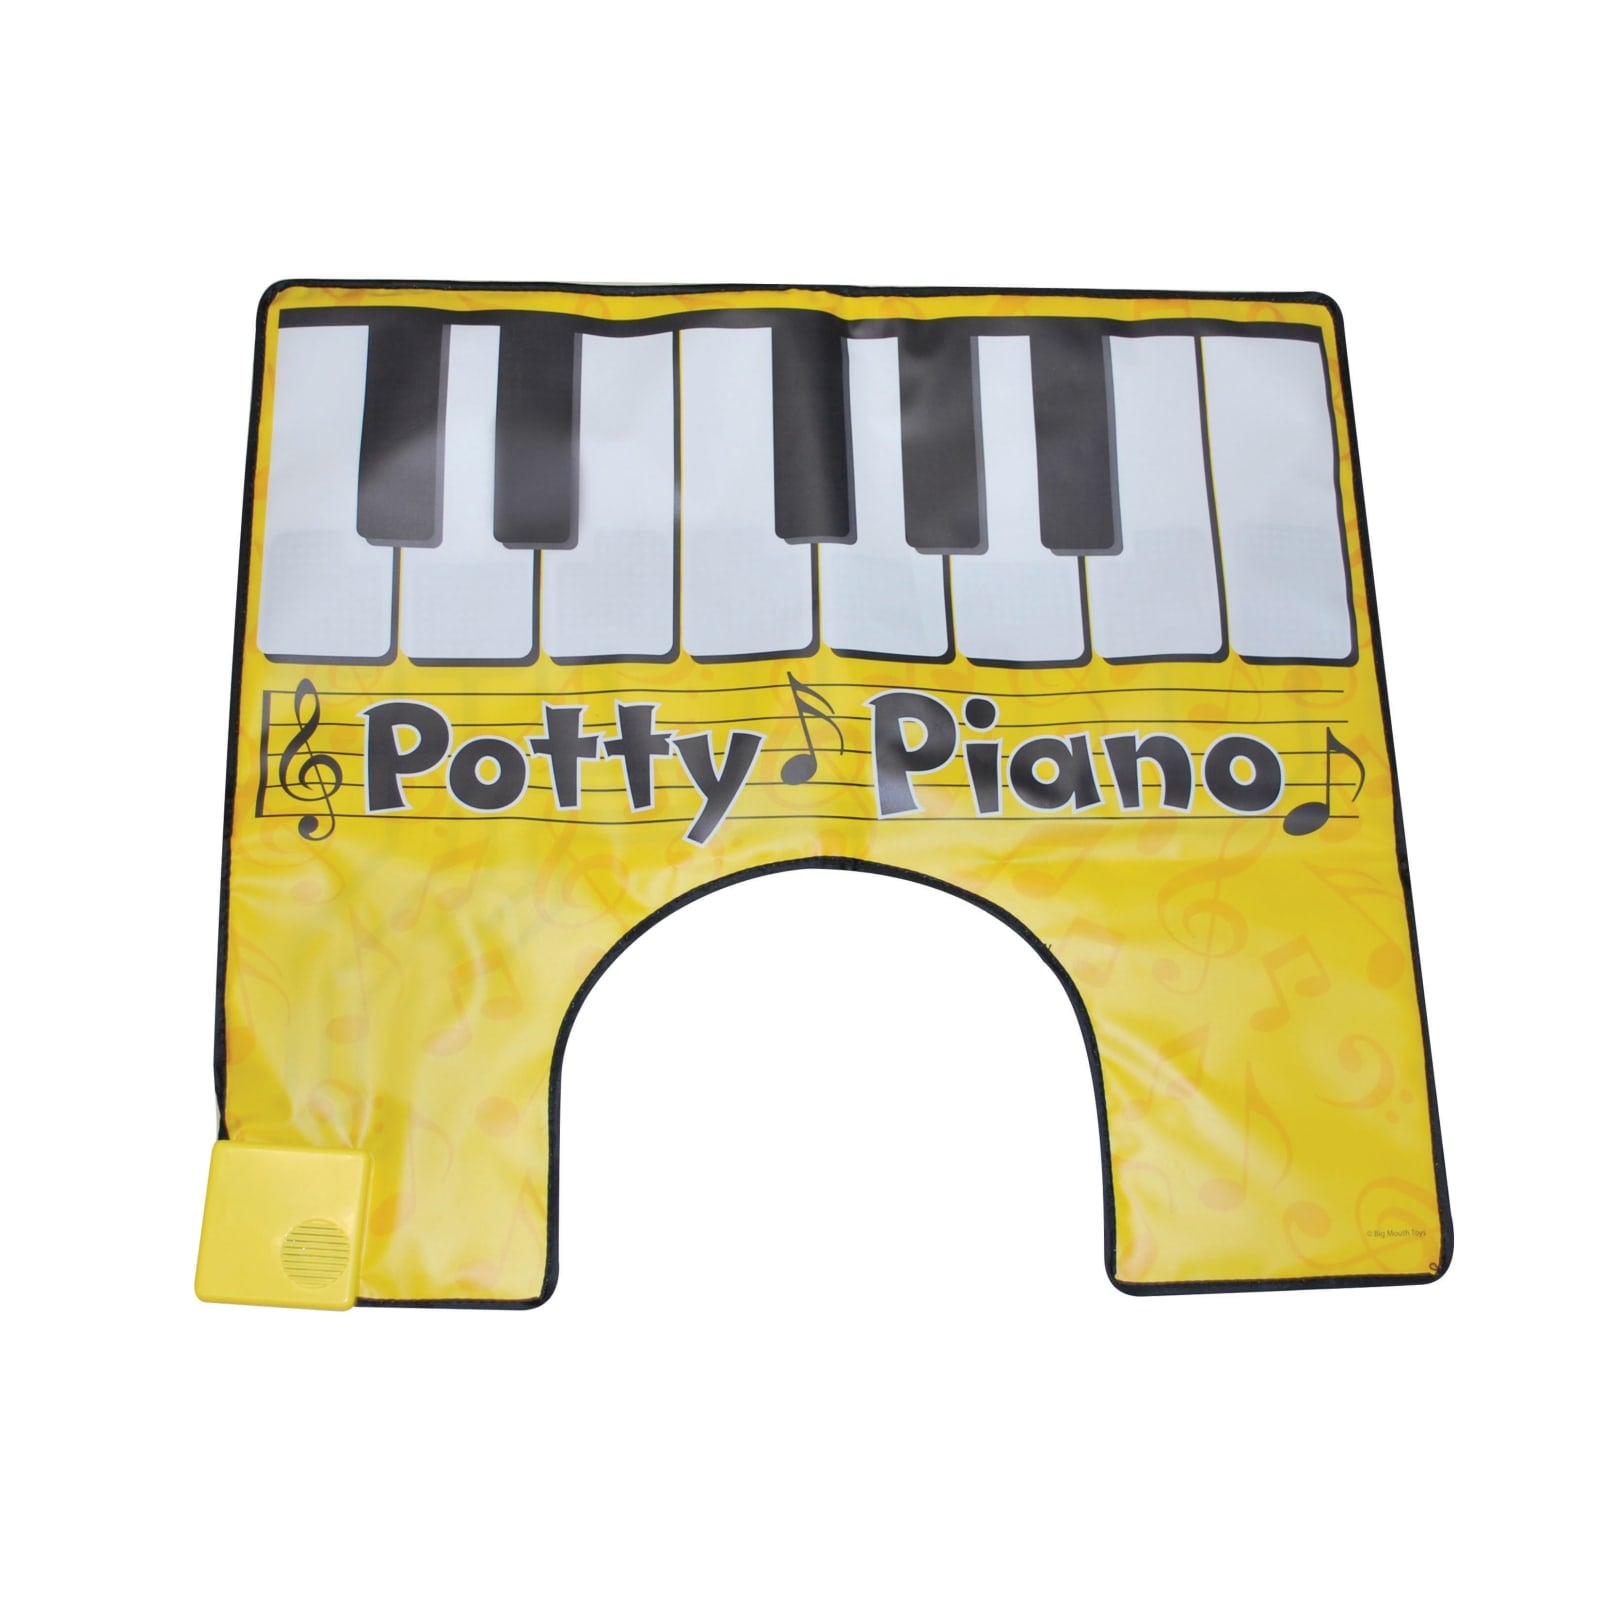 The Potty Piano